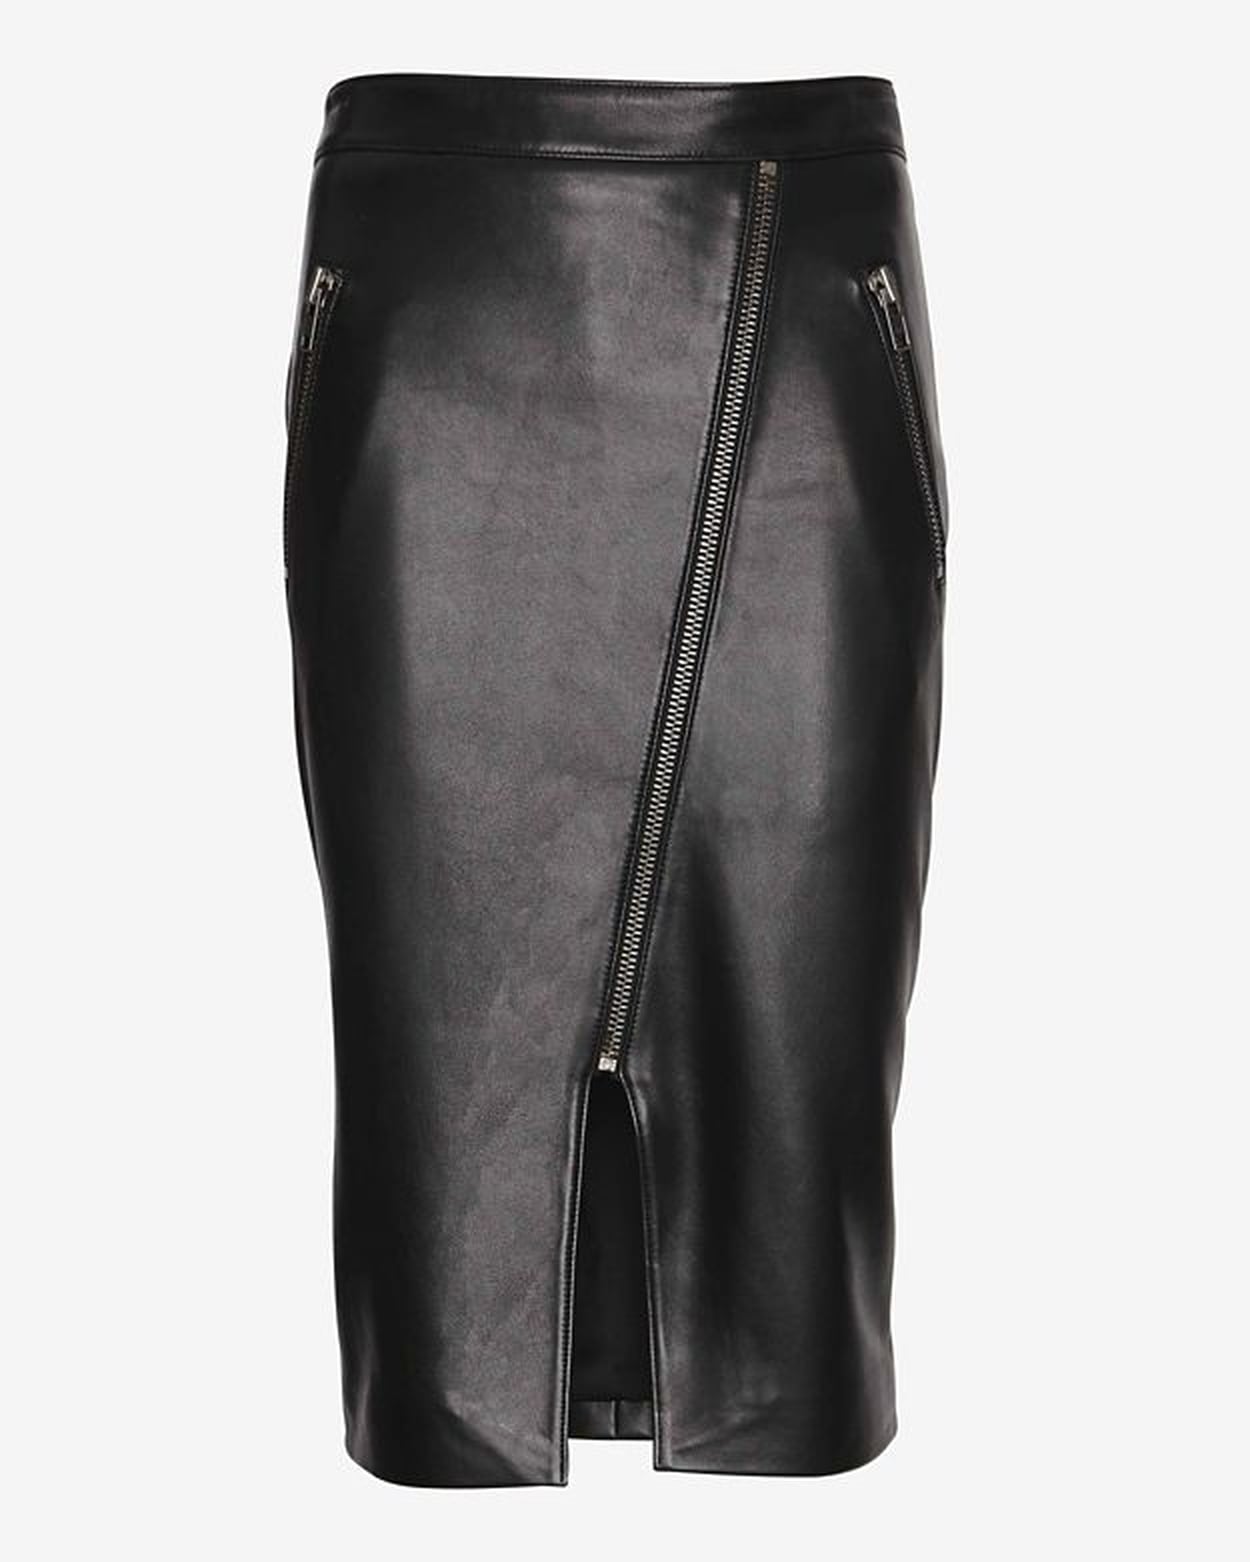 Slit Skirts For Fall | POPSUGAR Fashion